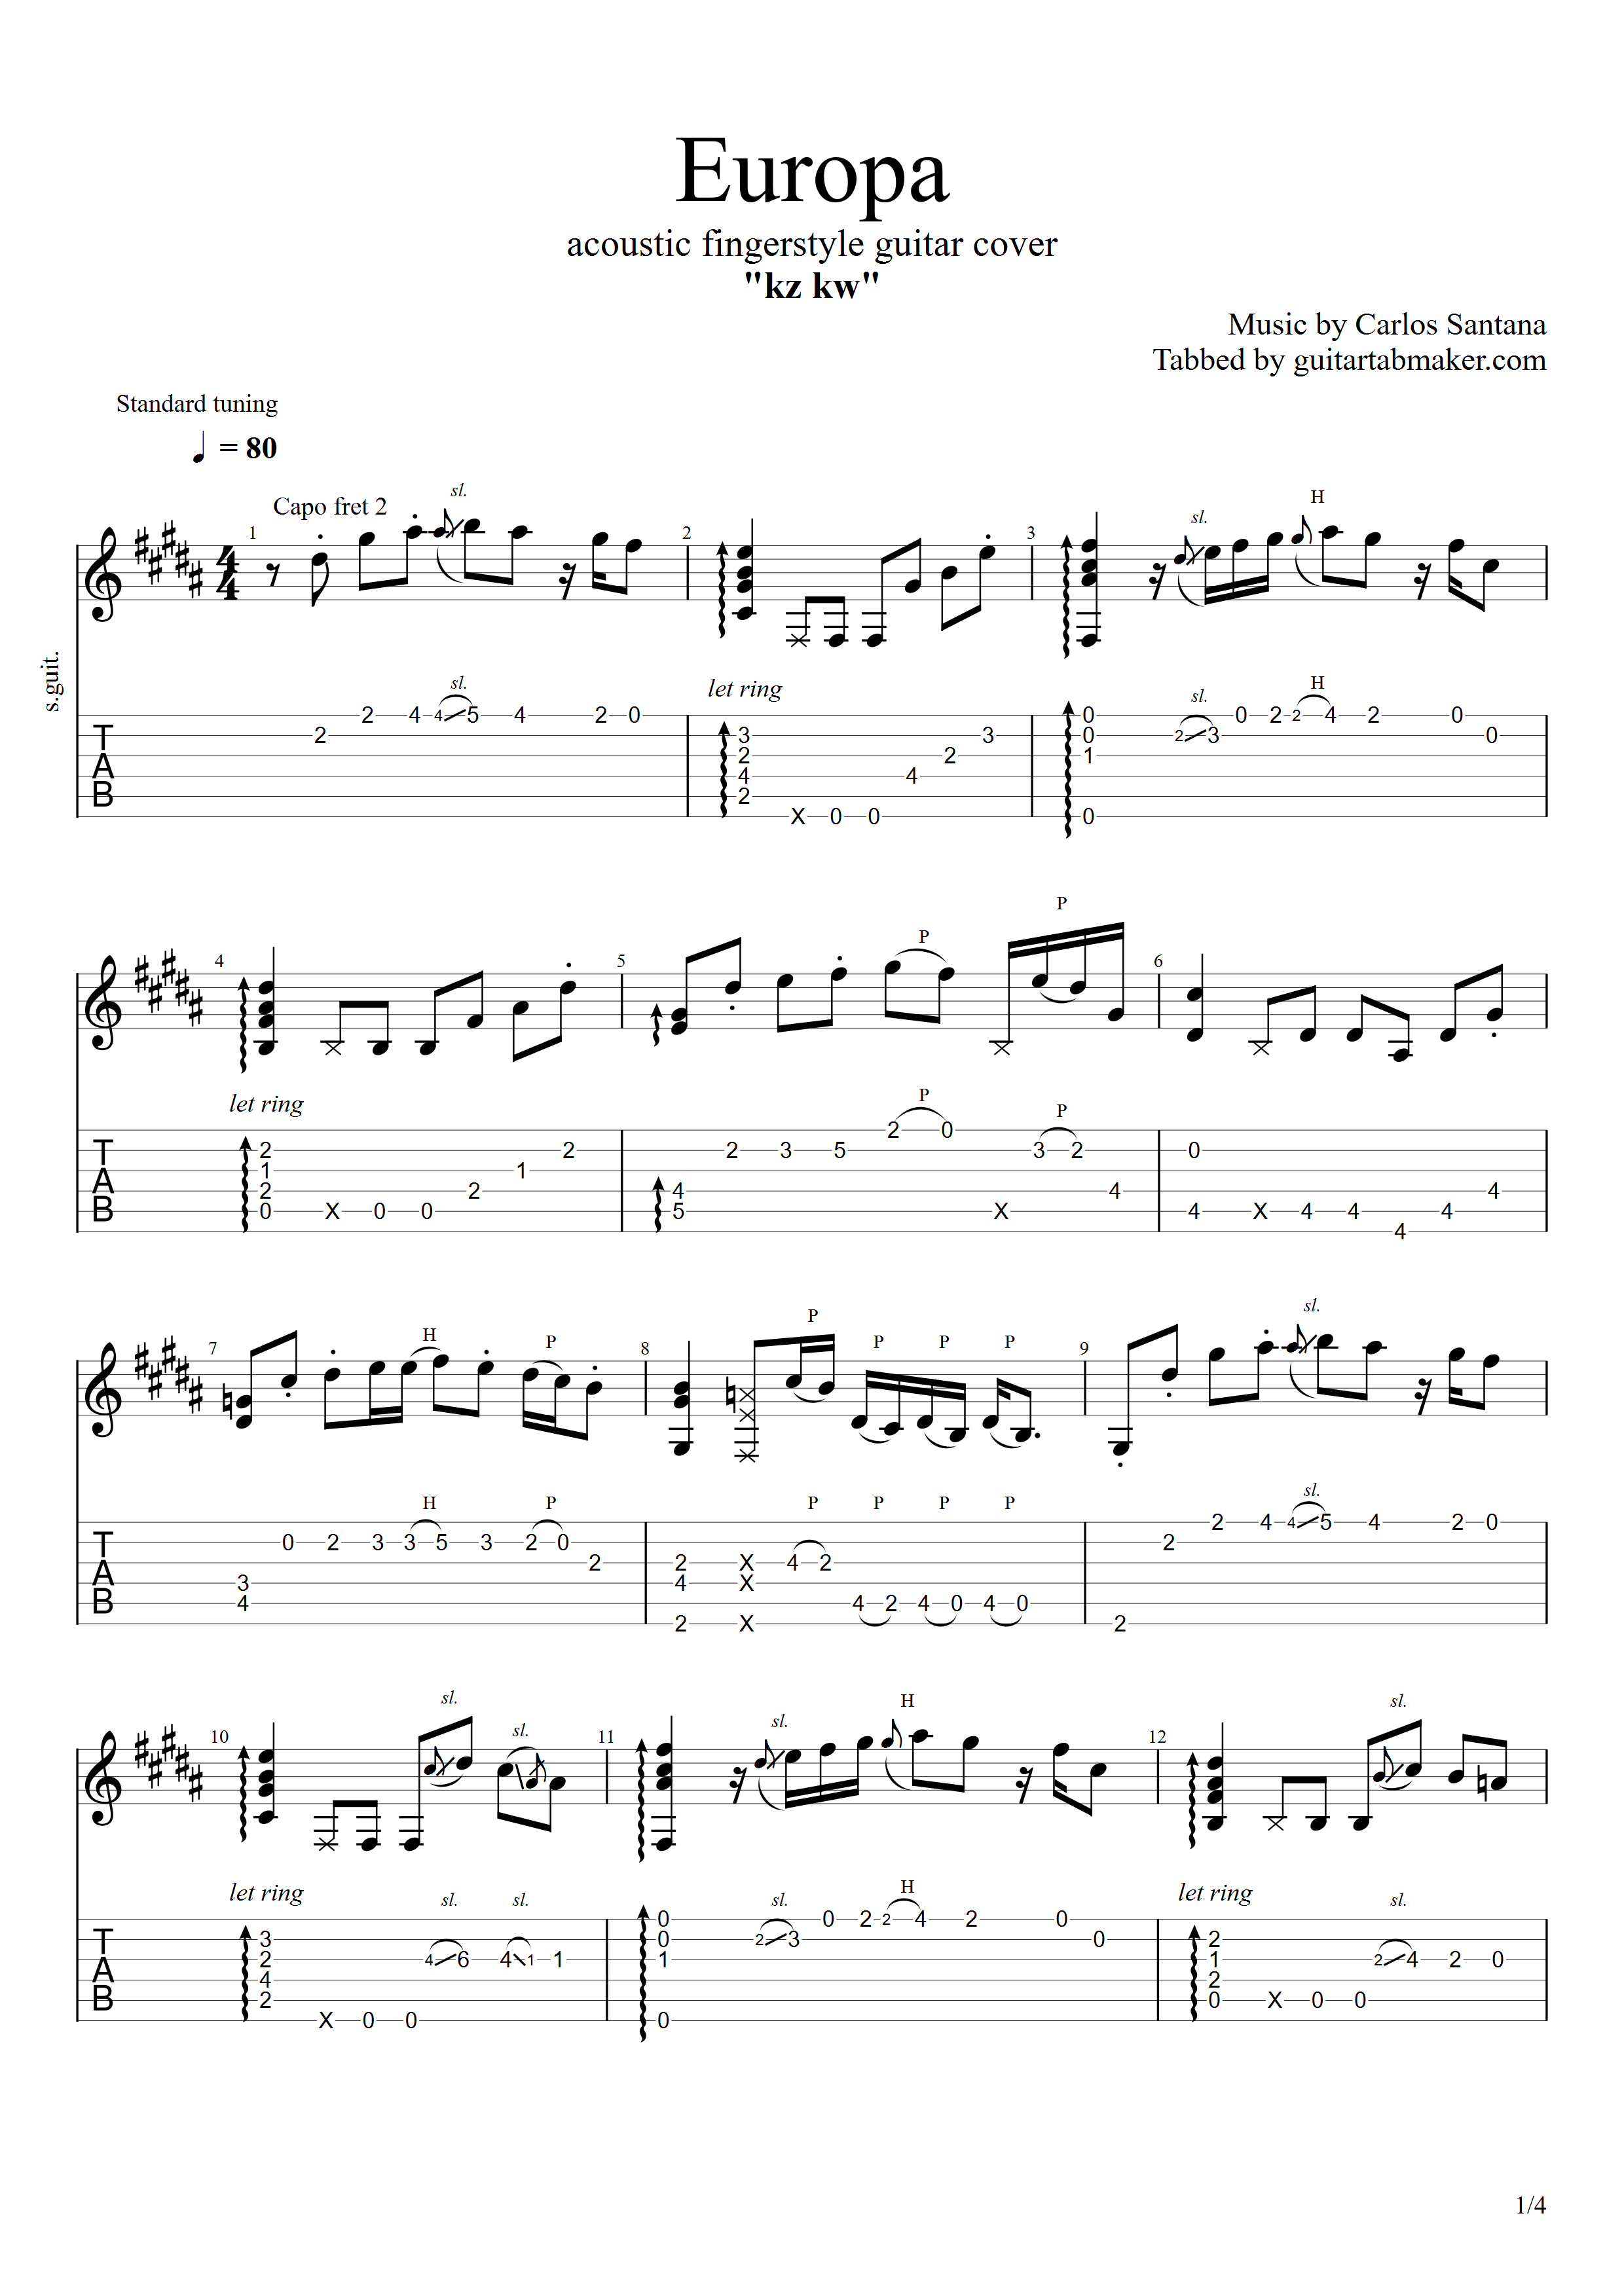 Europa by Santana - Guitar Tab - Guitar Instructor